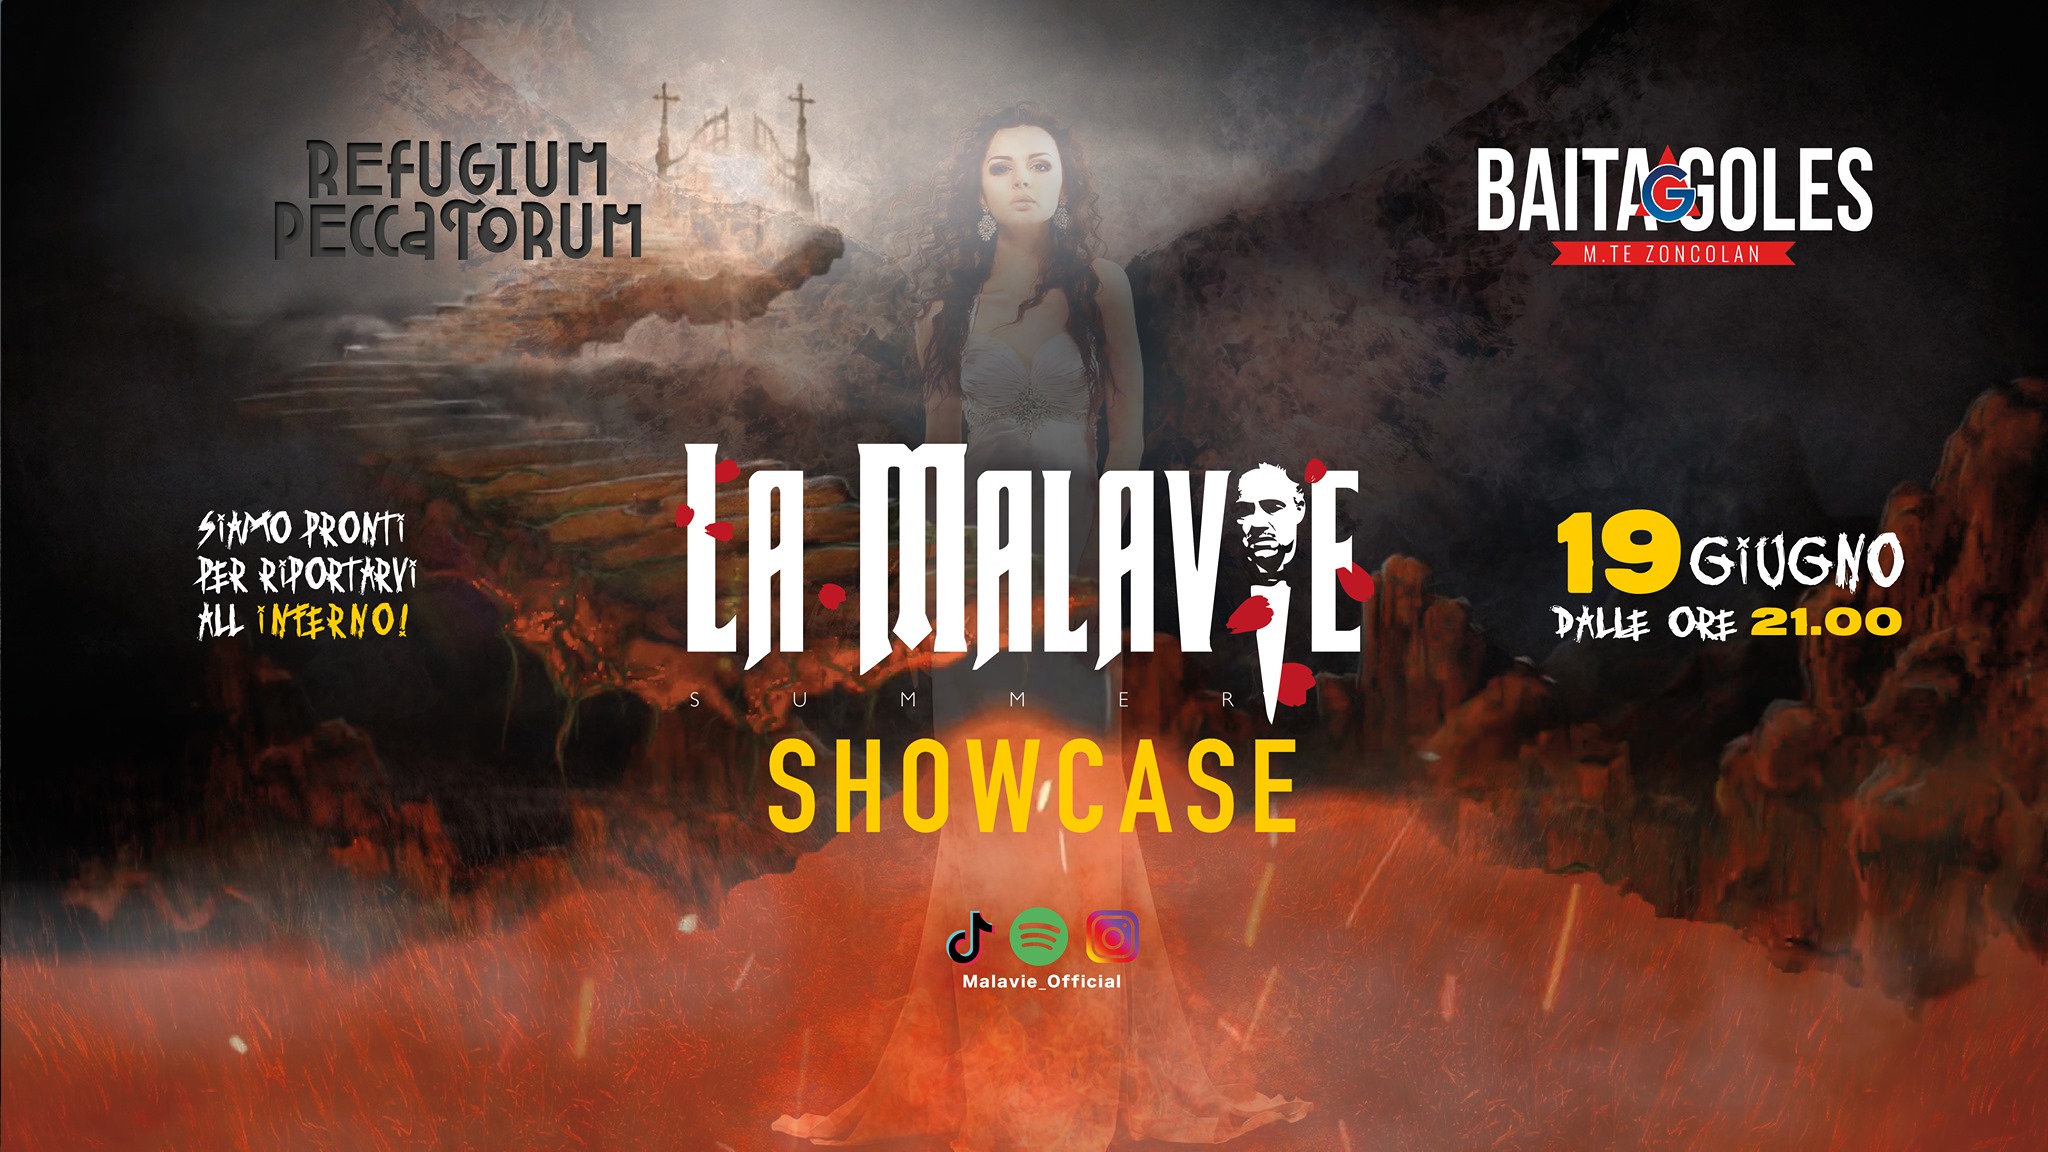 La Malavie Showcase Baita Goles Monte Zoncolan - EventiFVG.it